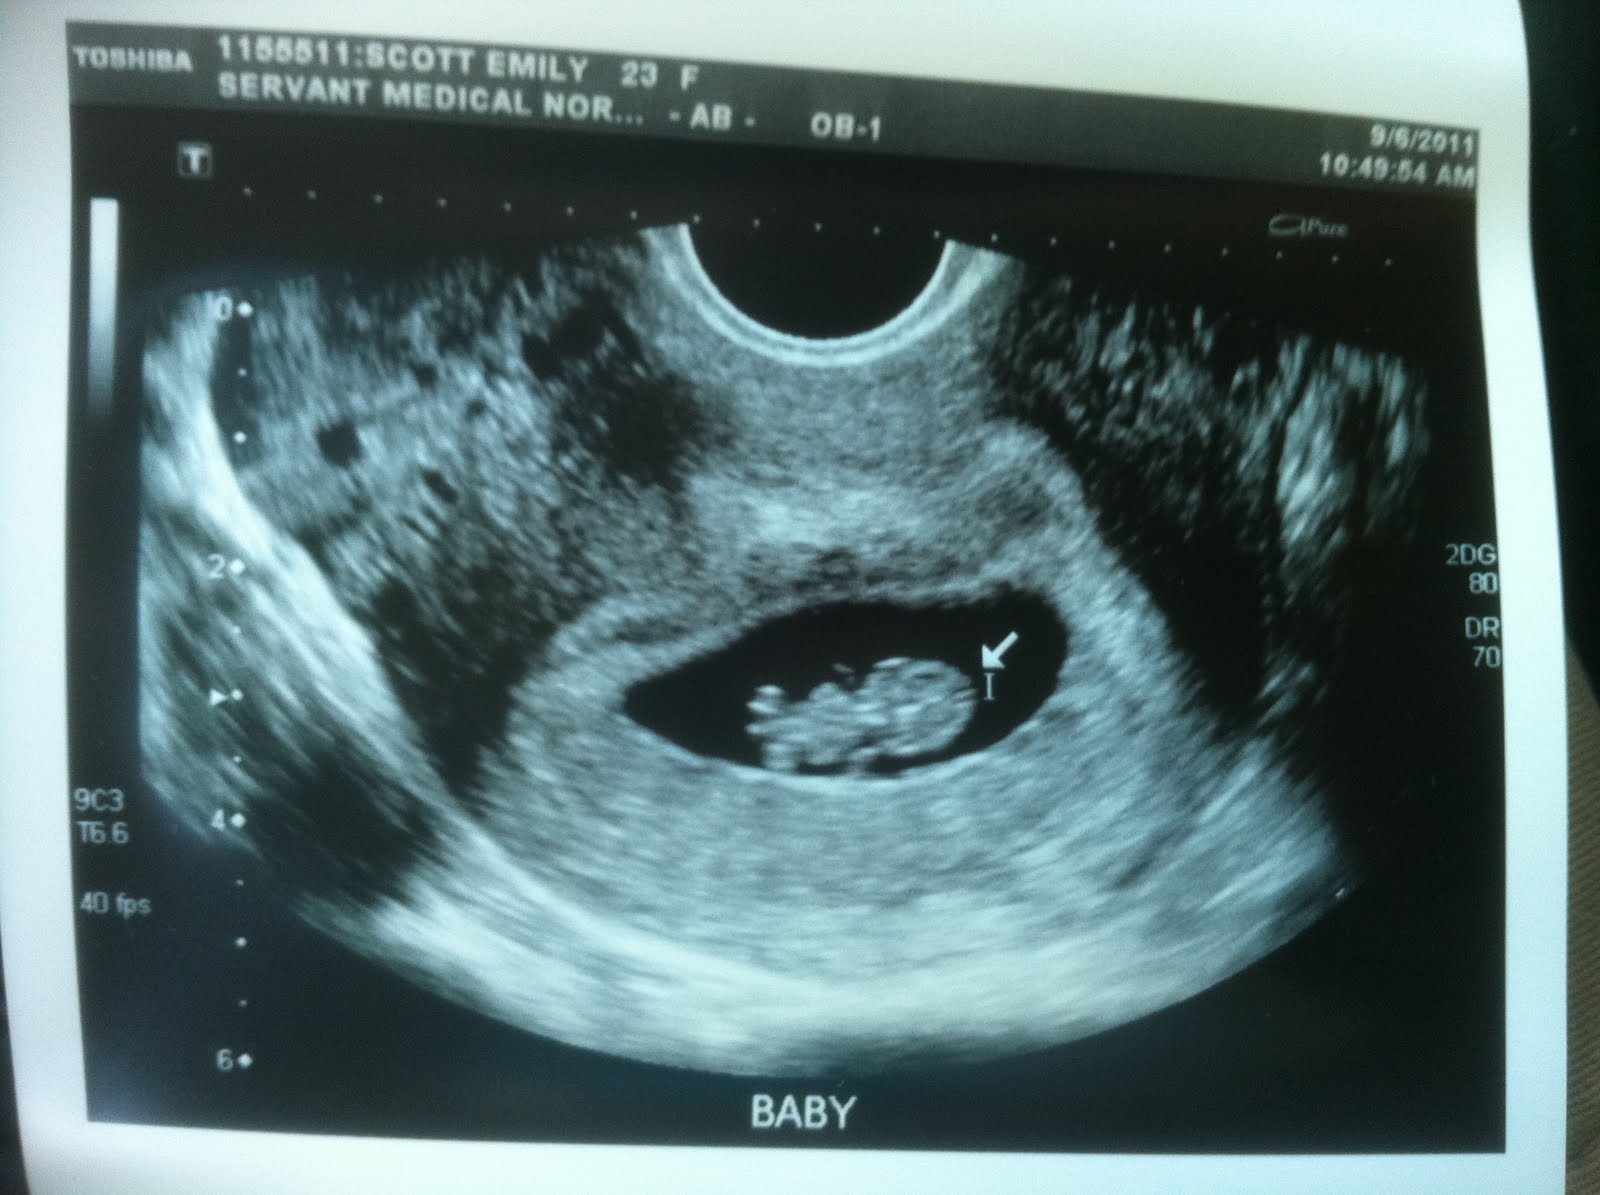 The Scott Family: Ultrasound - 9 weeks